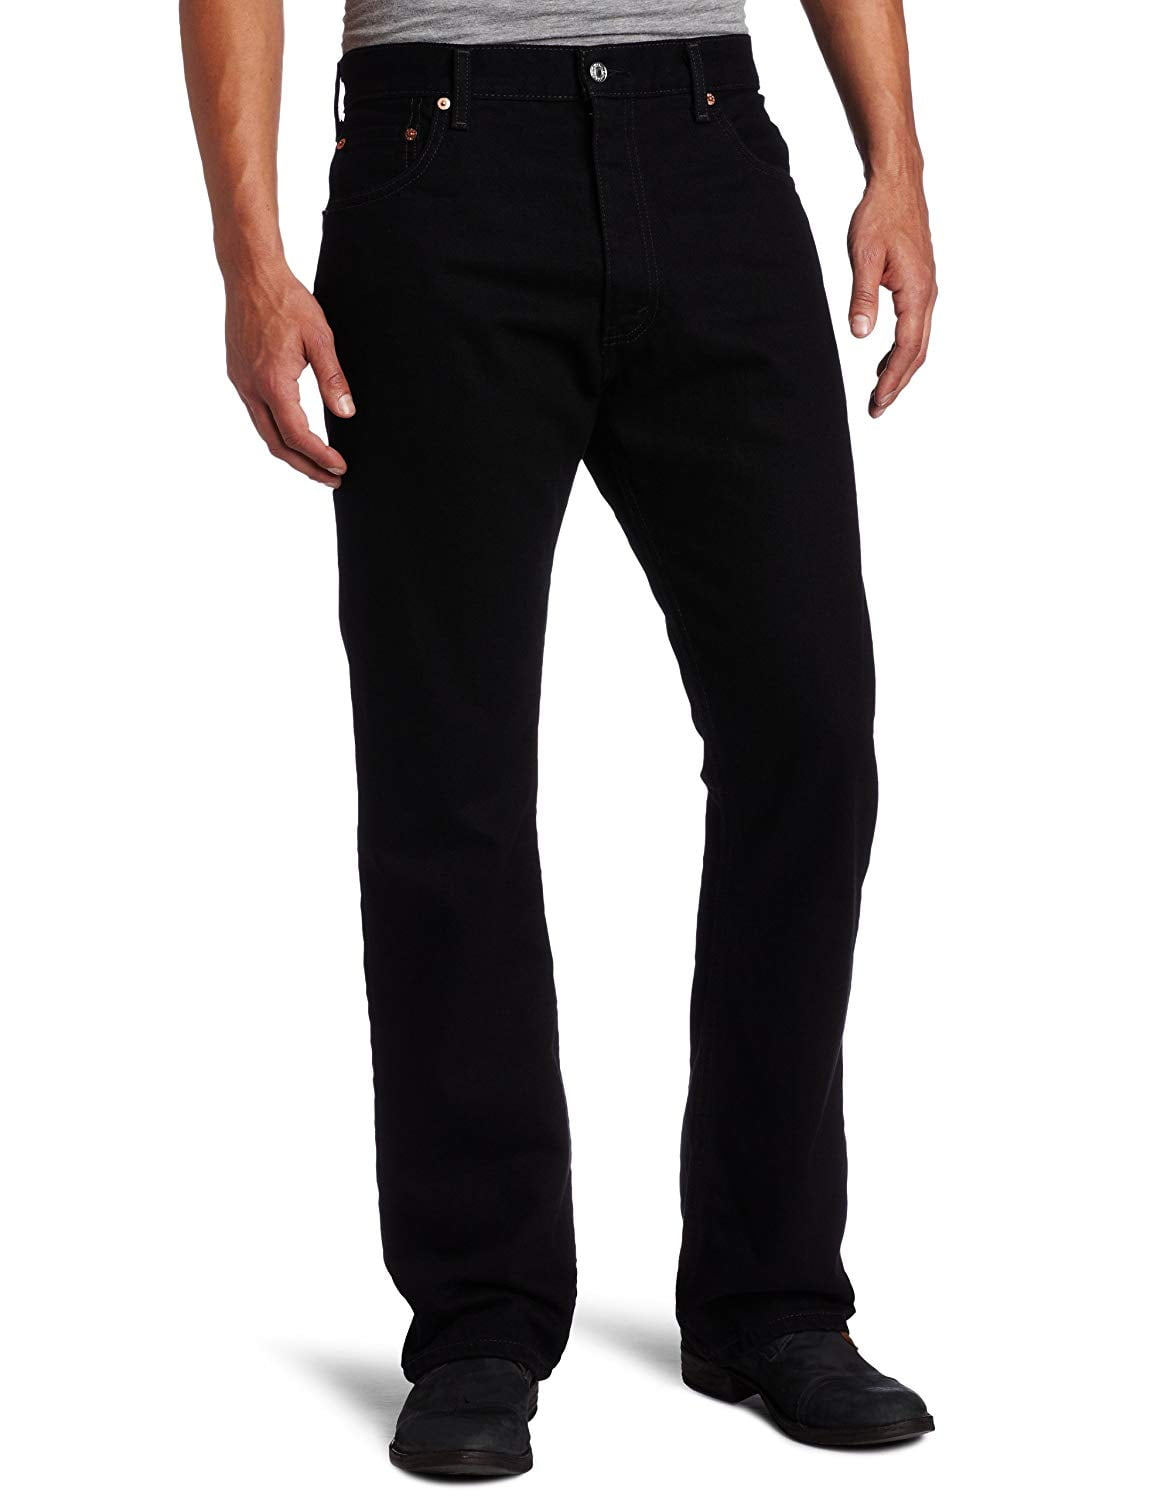 Levi's Men's 517 Boot Cut Jean, Black, 33x36 | Walmart Canada